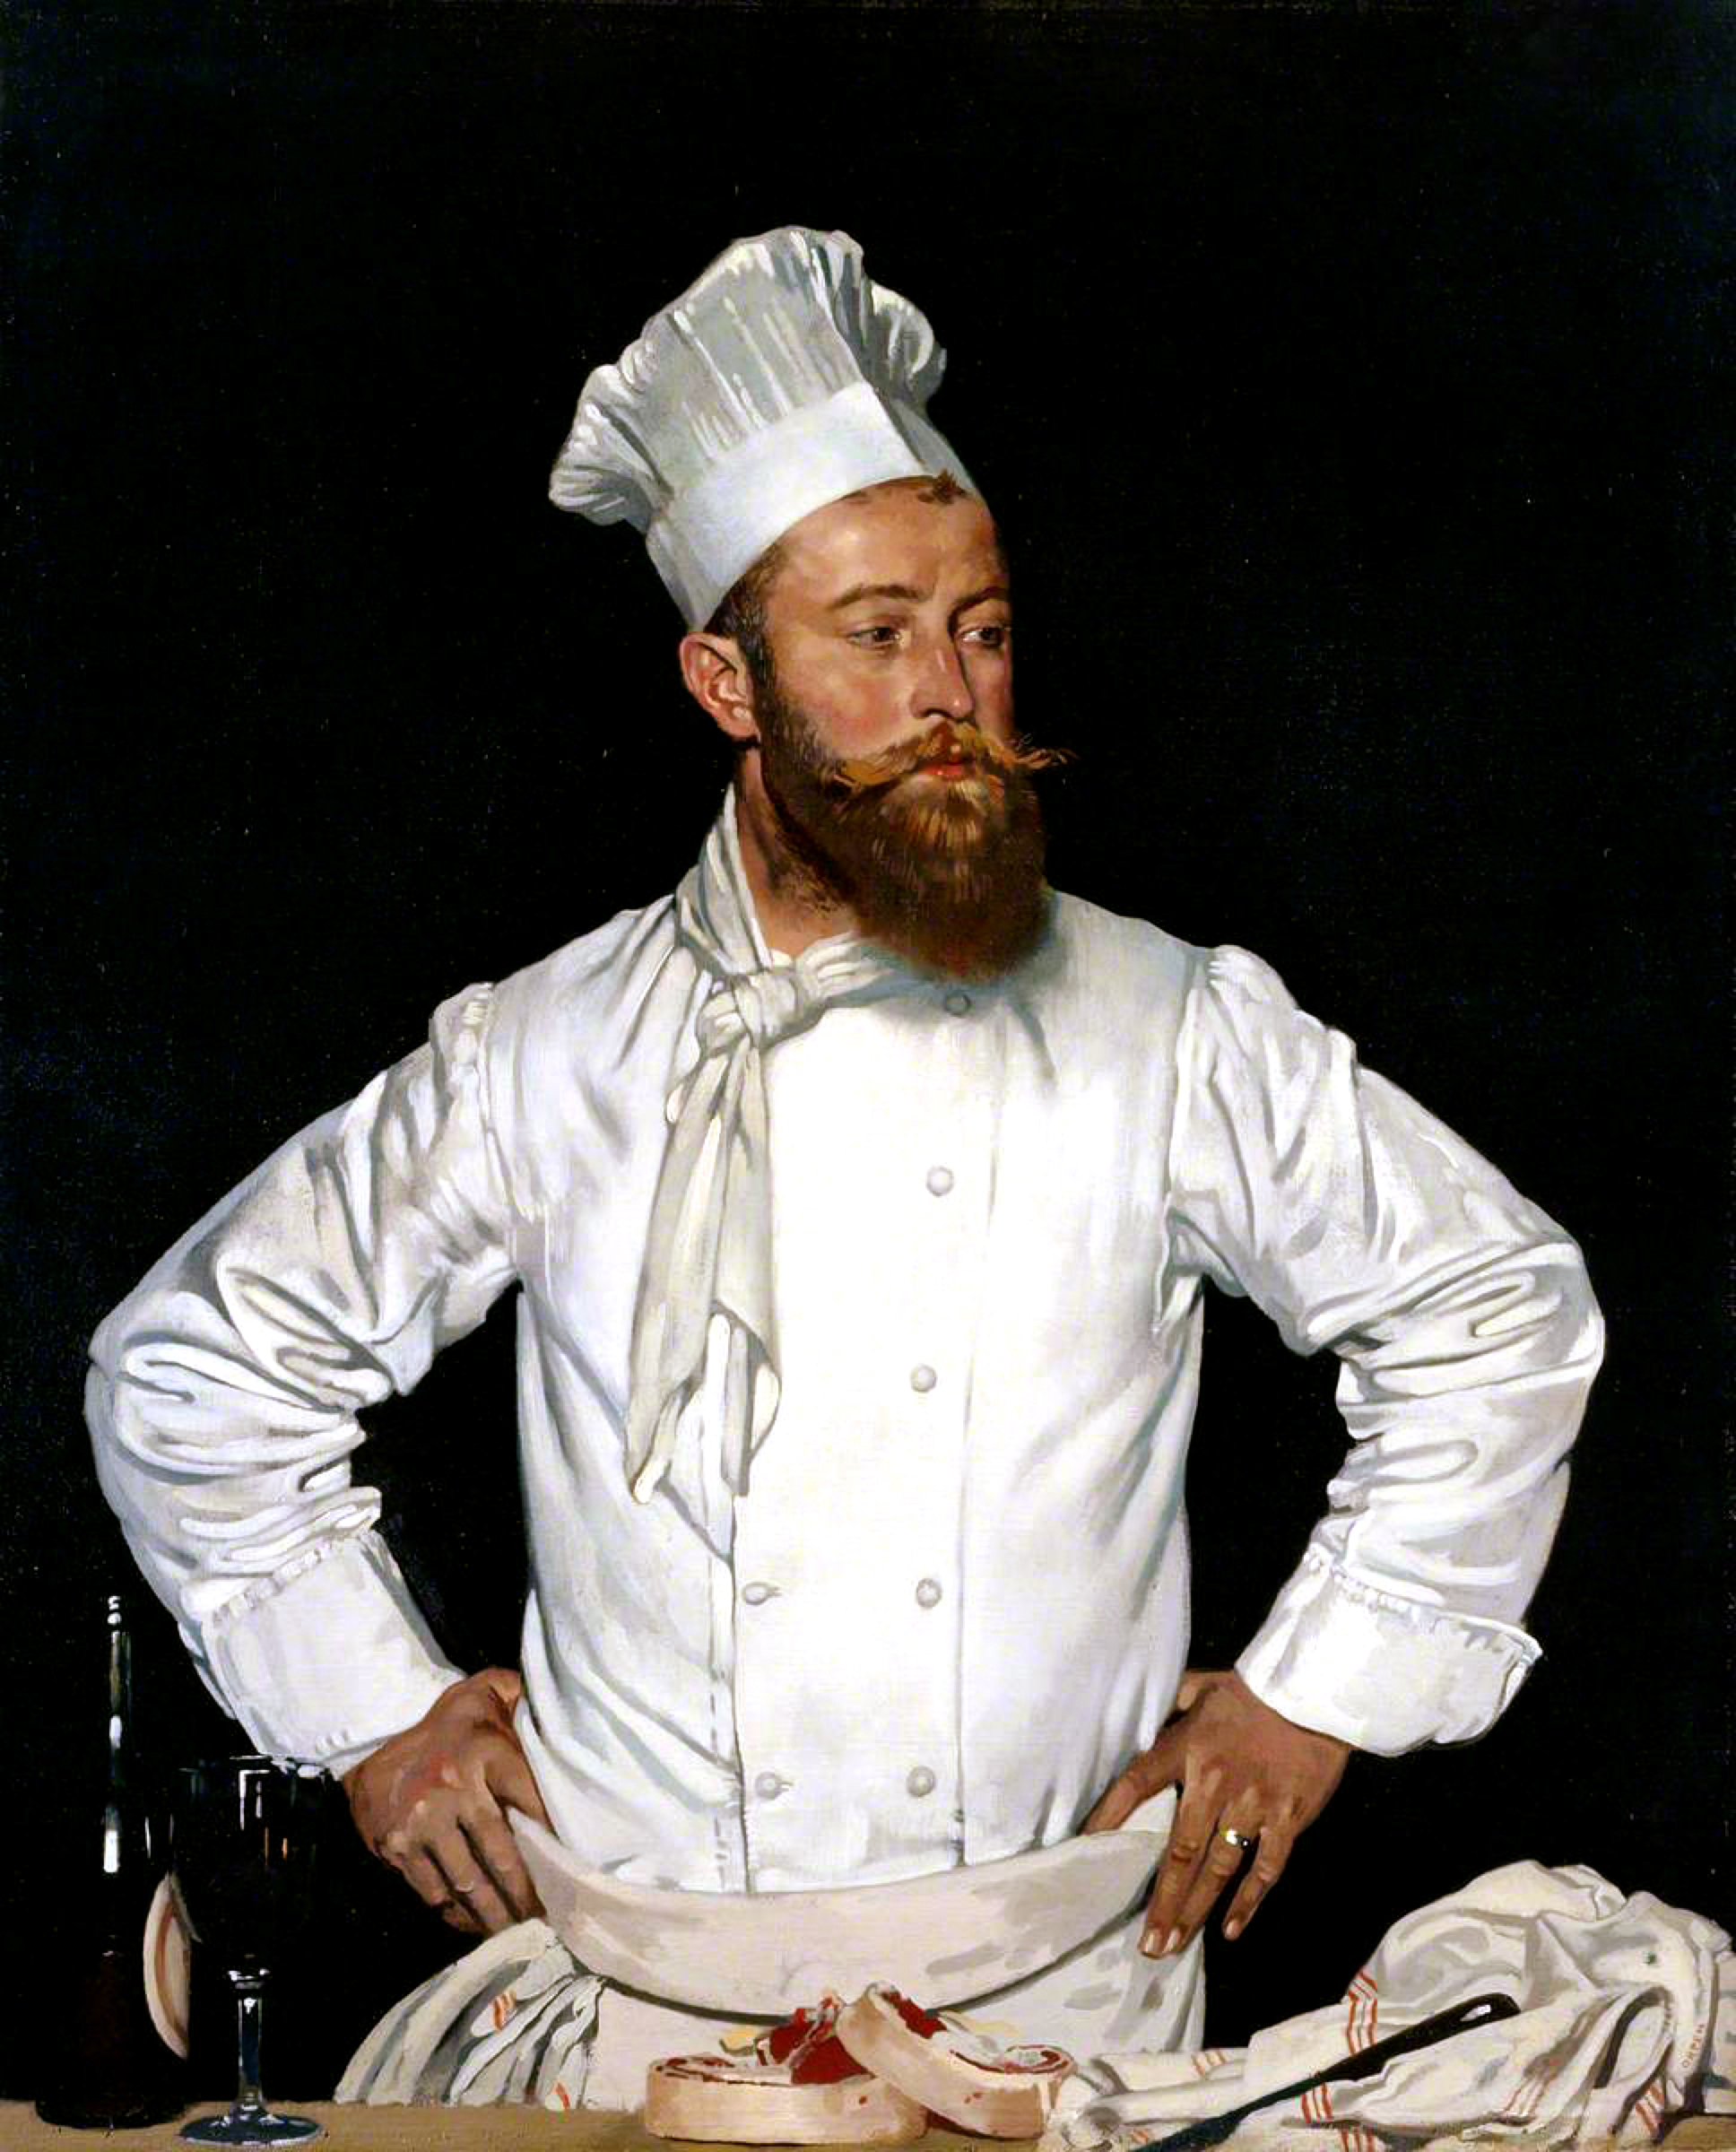 Chef de l'Hôtel Chatham by William Orpen - ca. 1921 - 127 x 102.5 cm Royal Academy of Arts